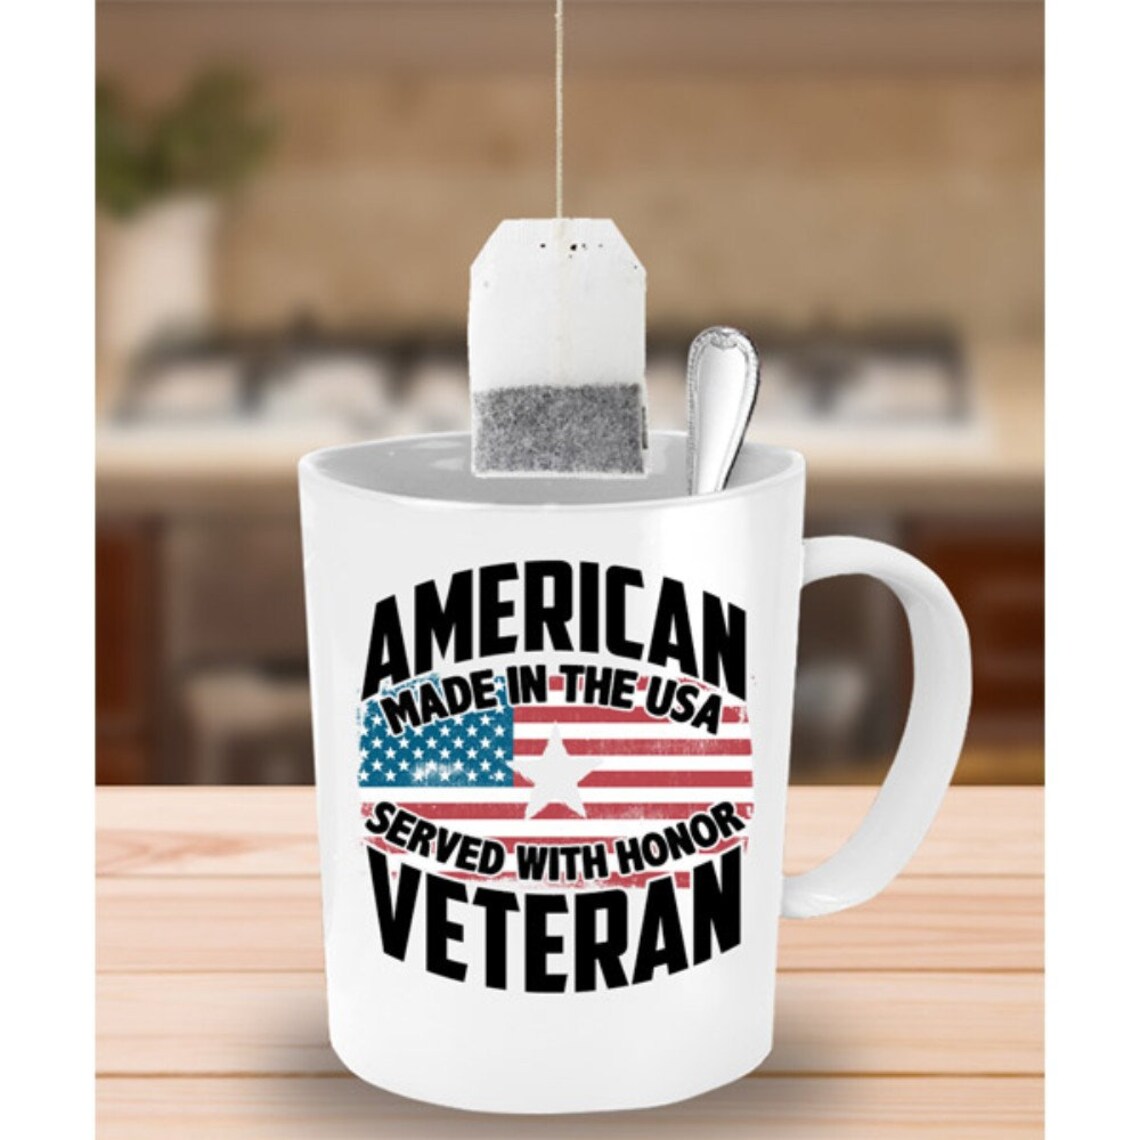 Veteran Day Gift Ideas Patriotic Gift Idea Military Etsy